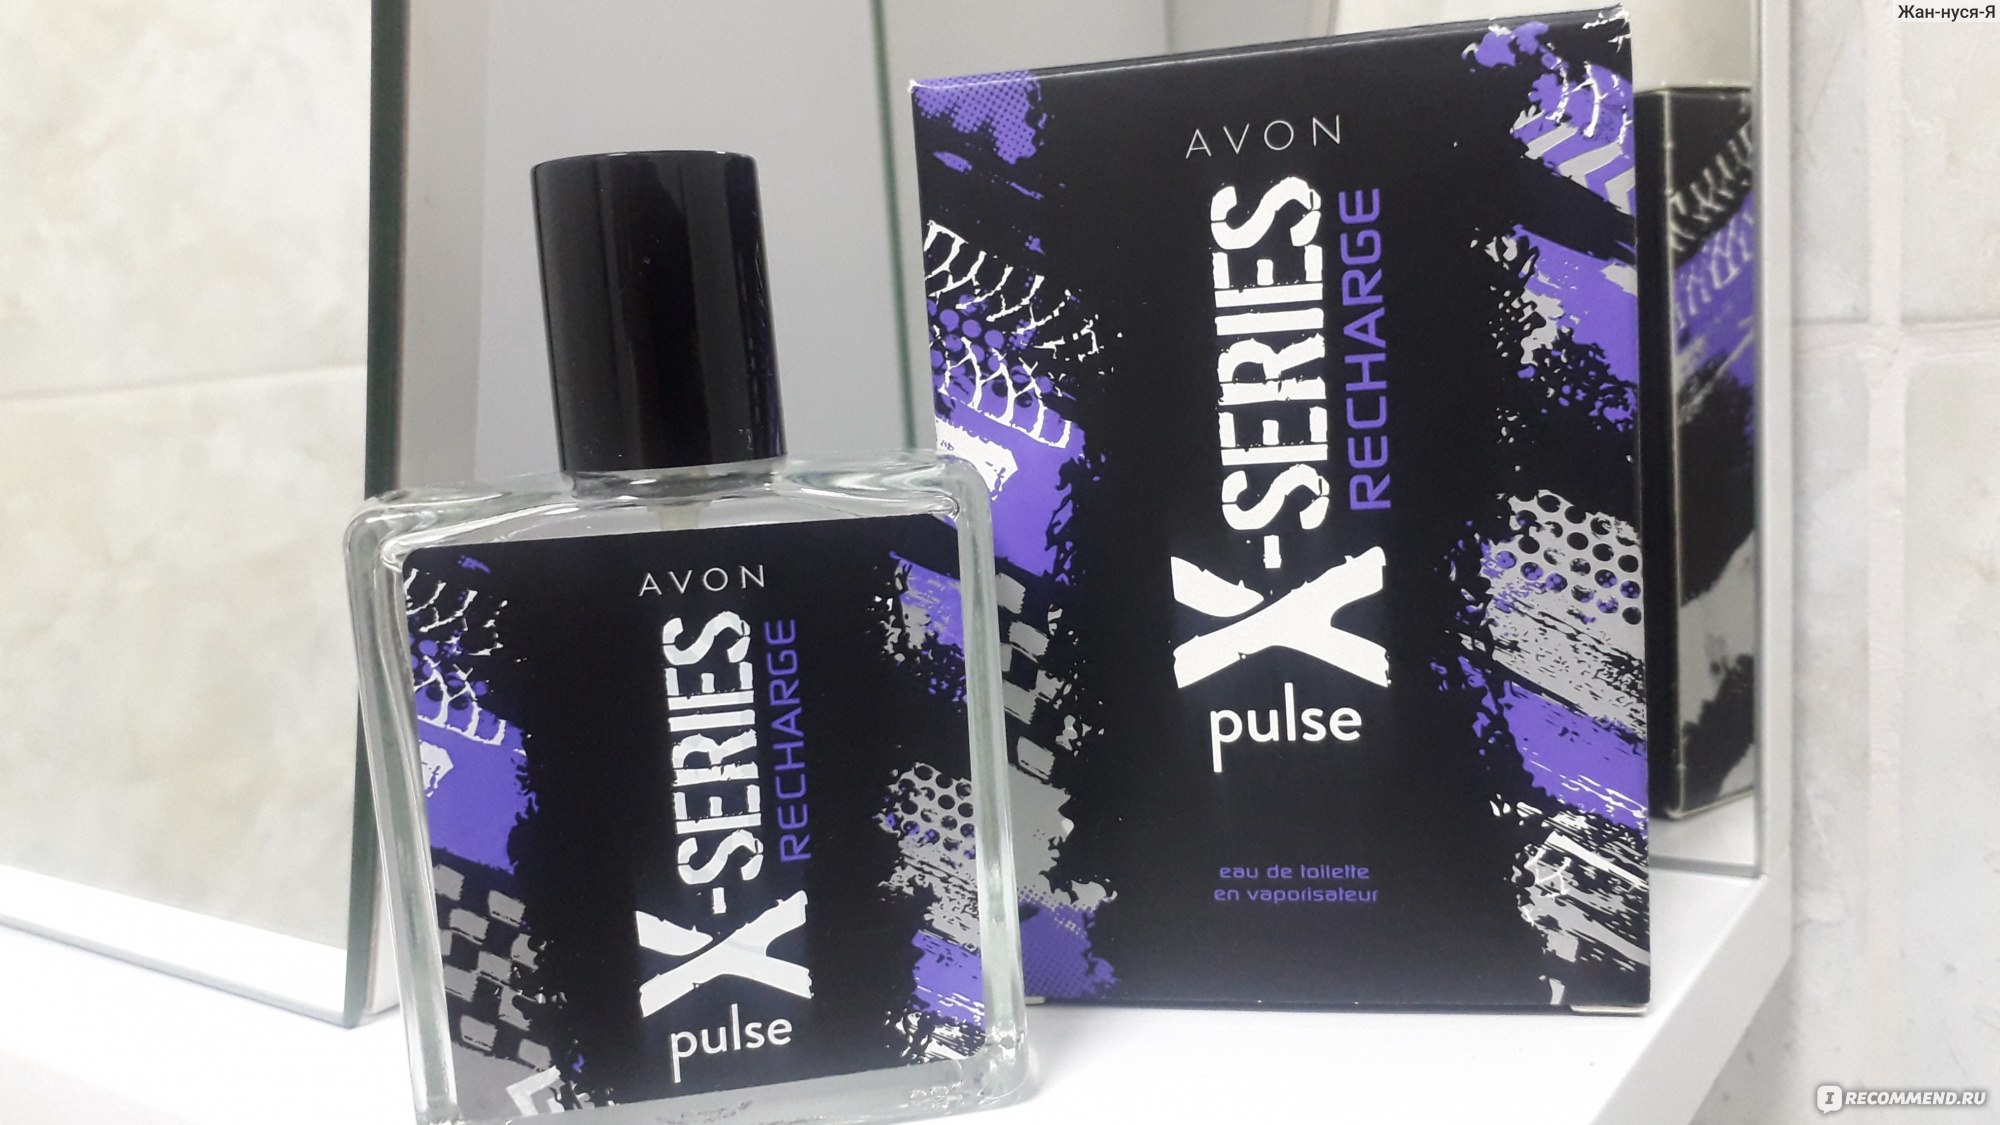 Avon x pulse. Avon x Series Pulse. Avon x Series мужские духи Pulse. Туалетная вода эйвон х-Series Pulse. Духи Avon мужские x-Series Recharge.